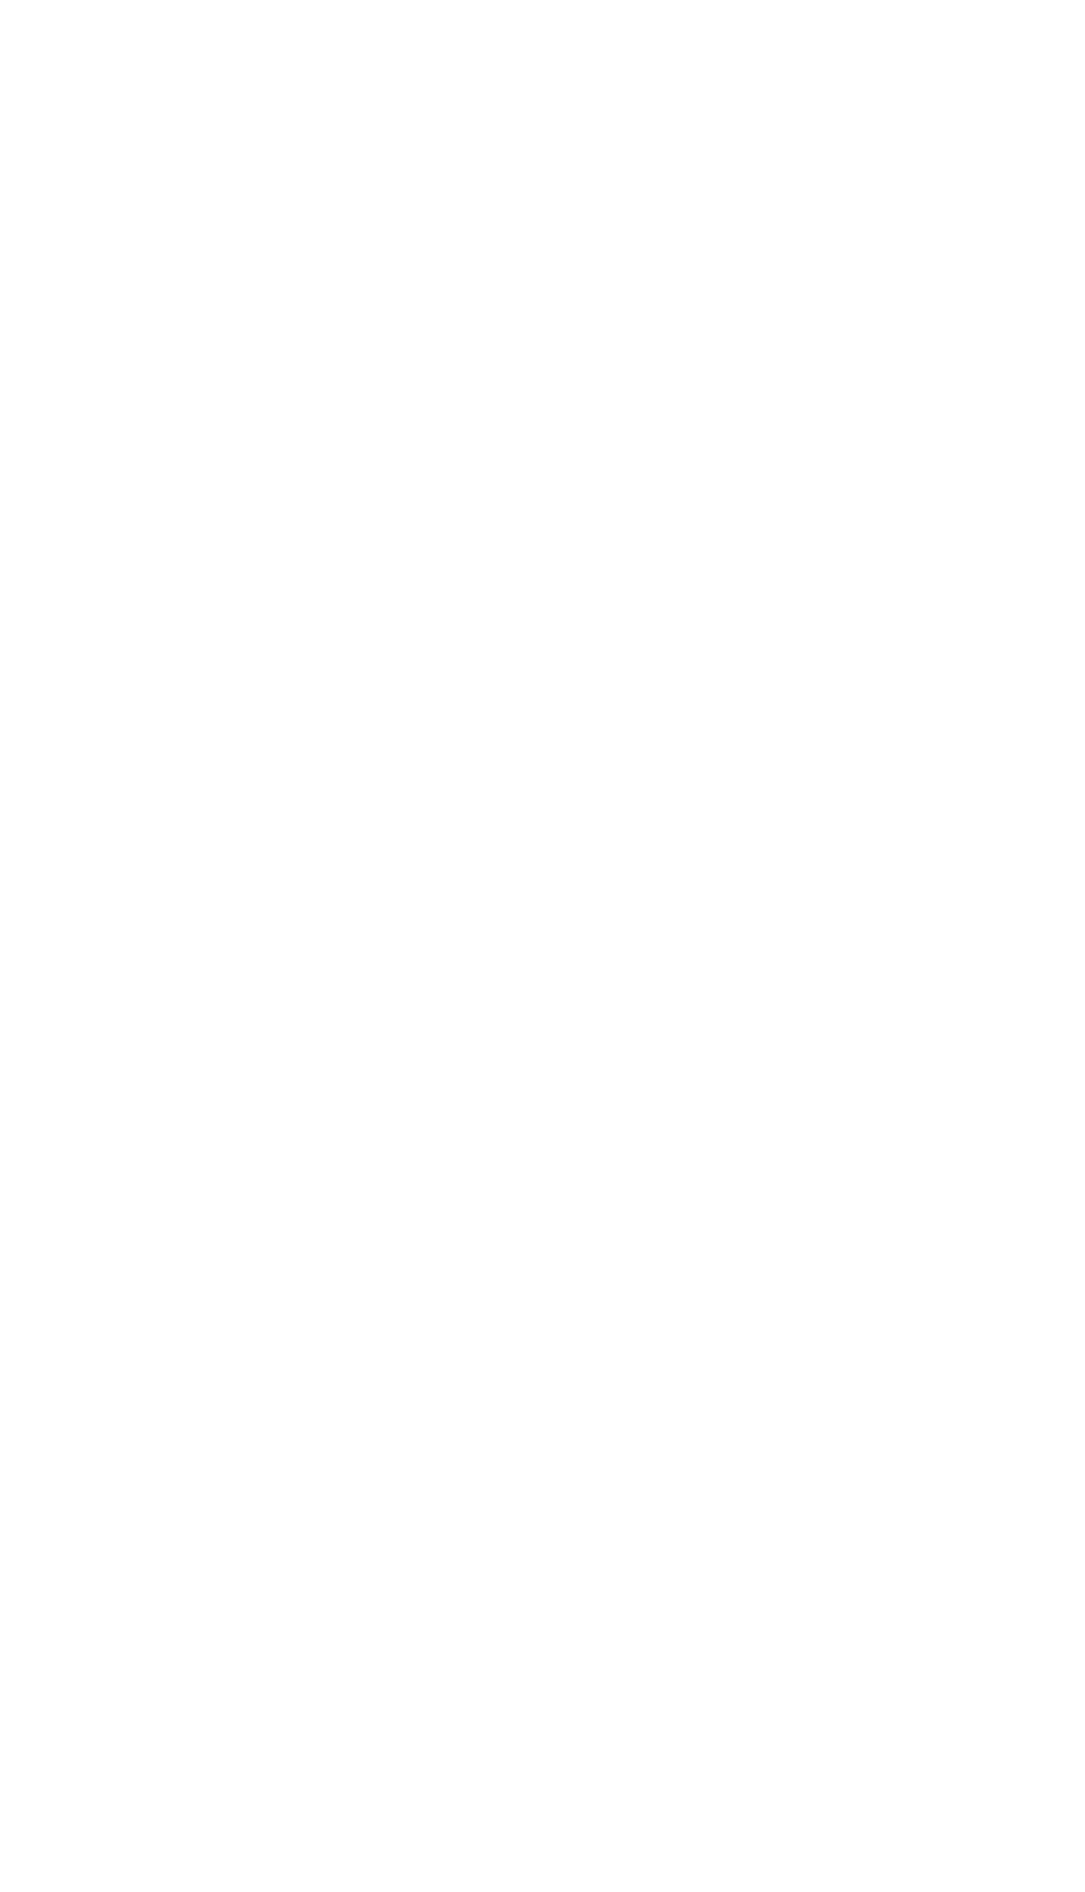 SIX BERLIN MAJOR 2022